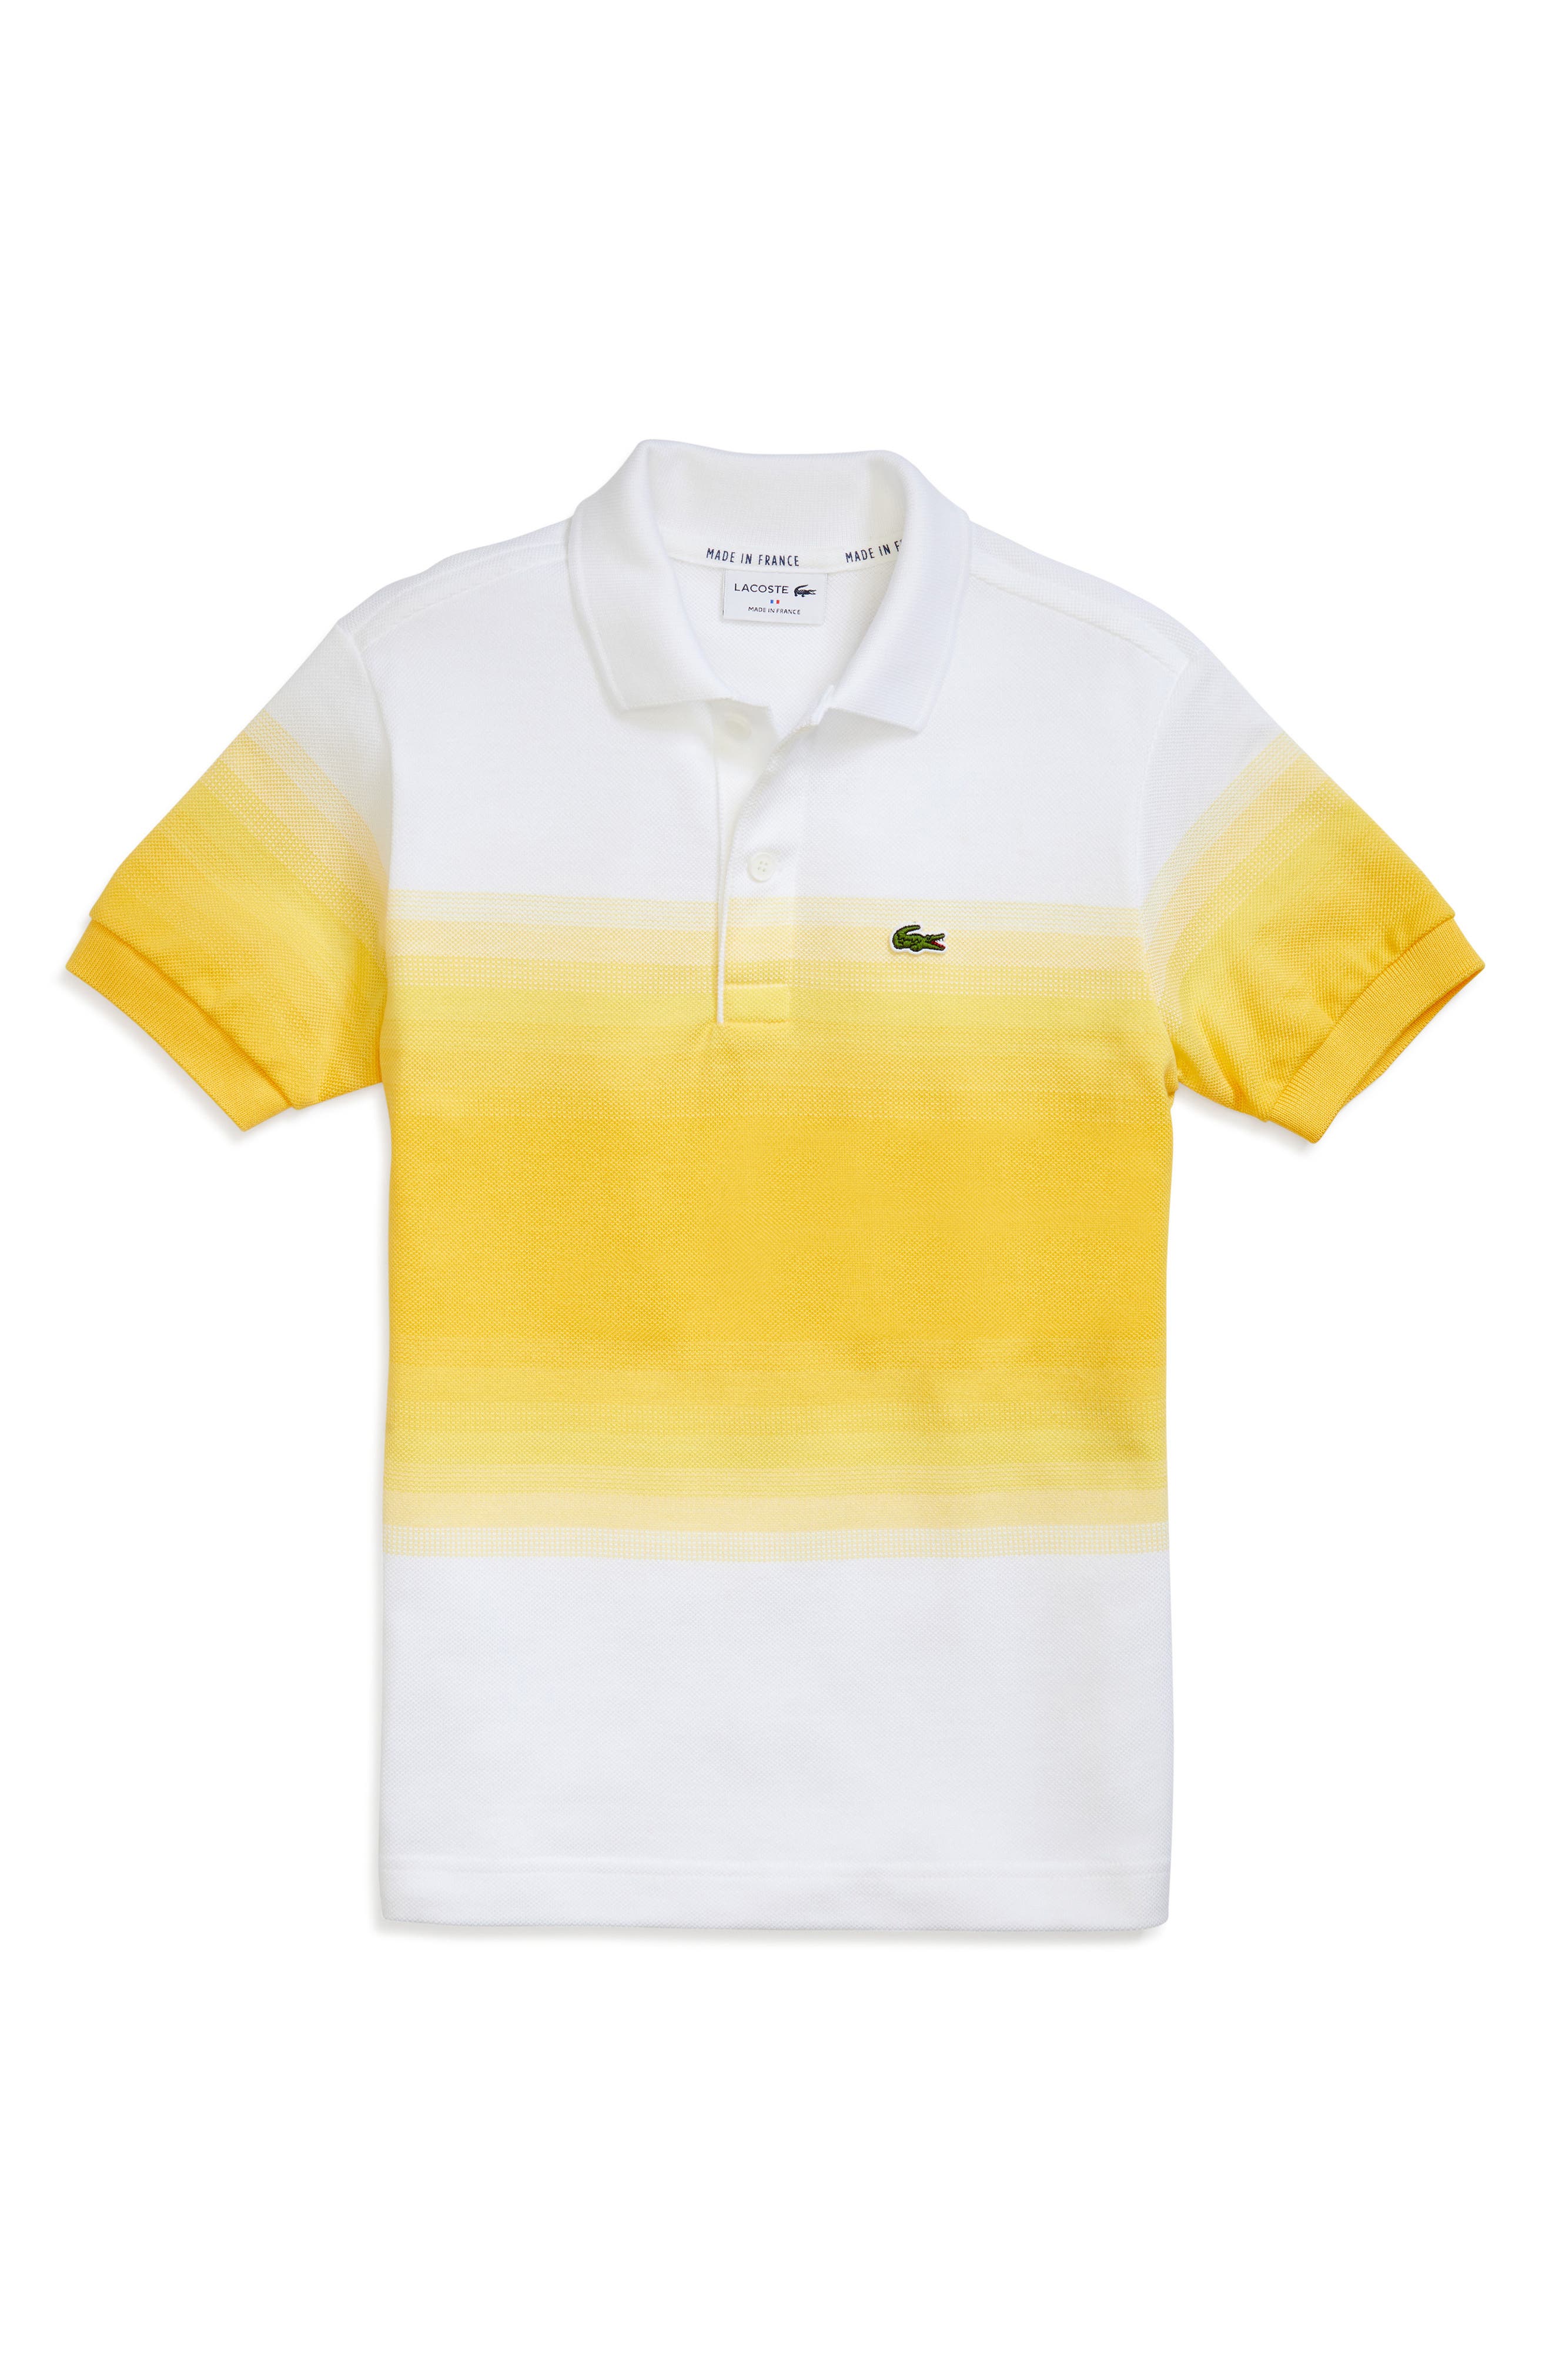 yellow lacoste polo shirt